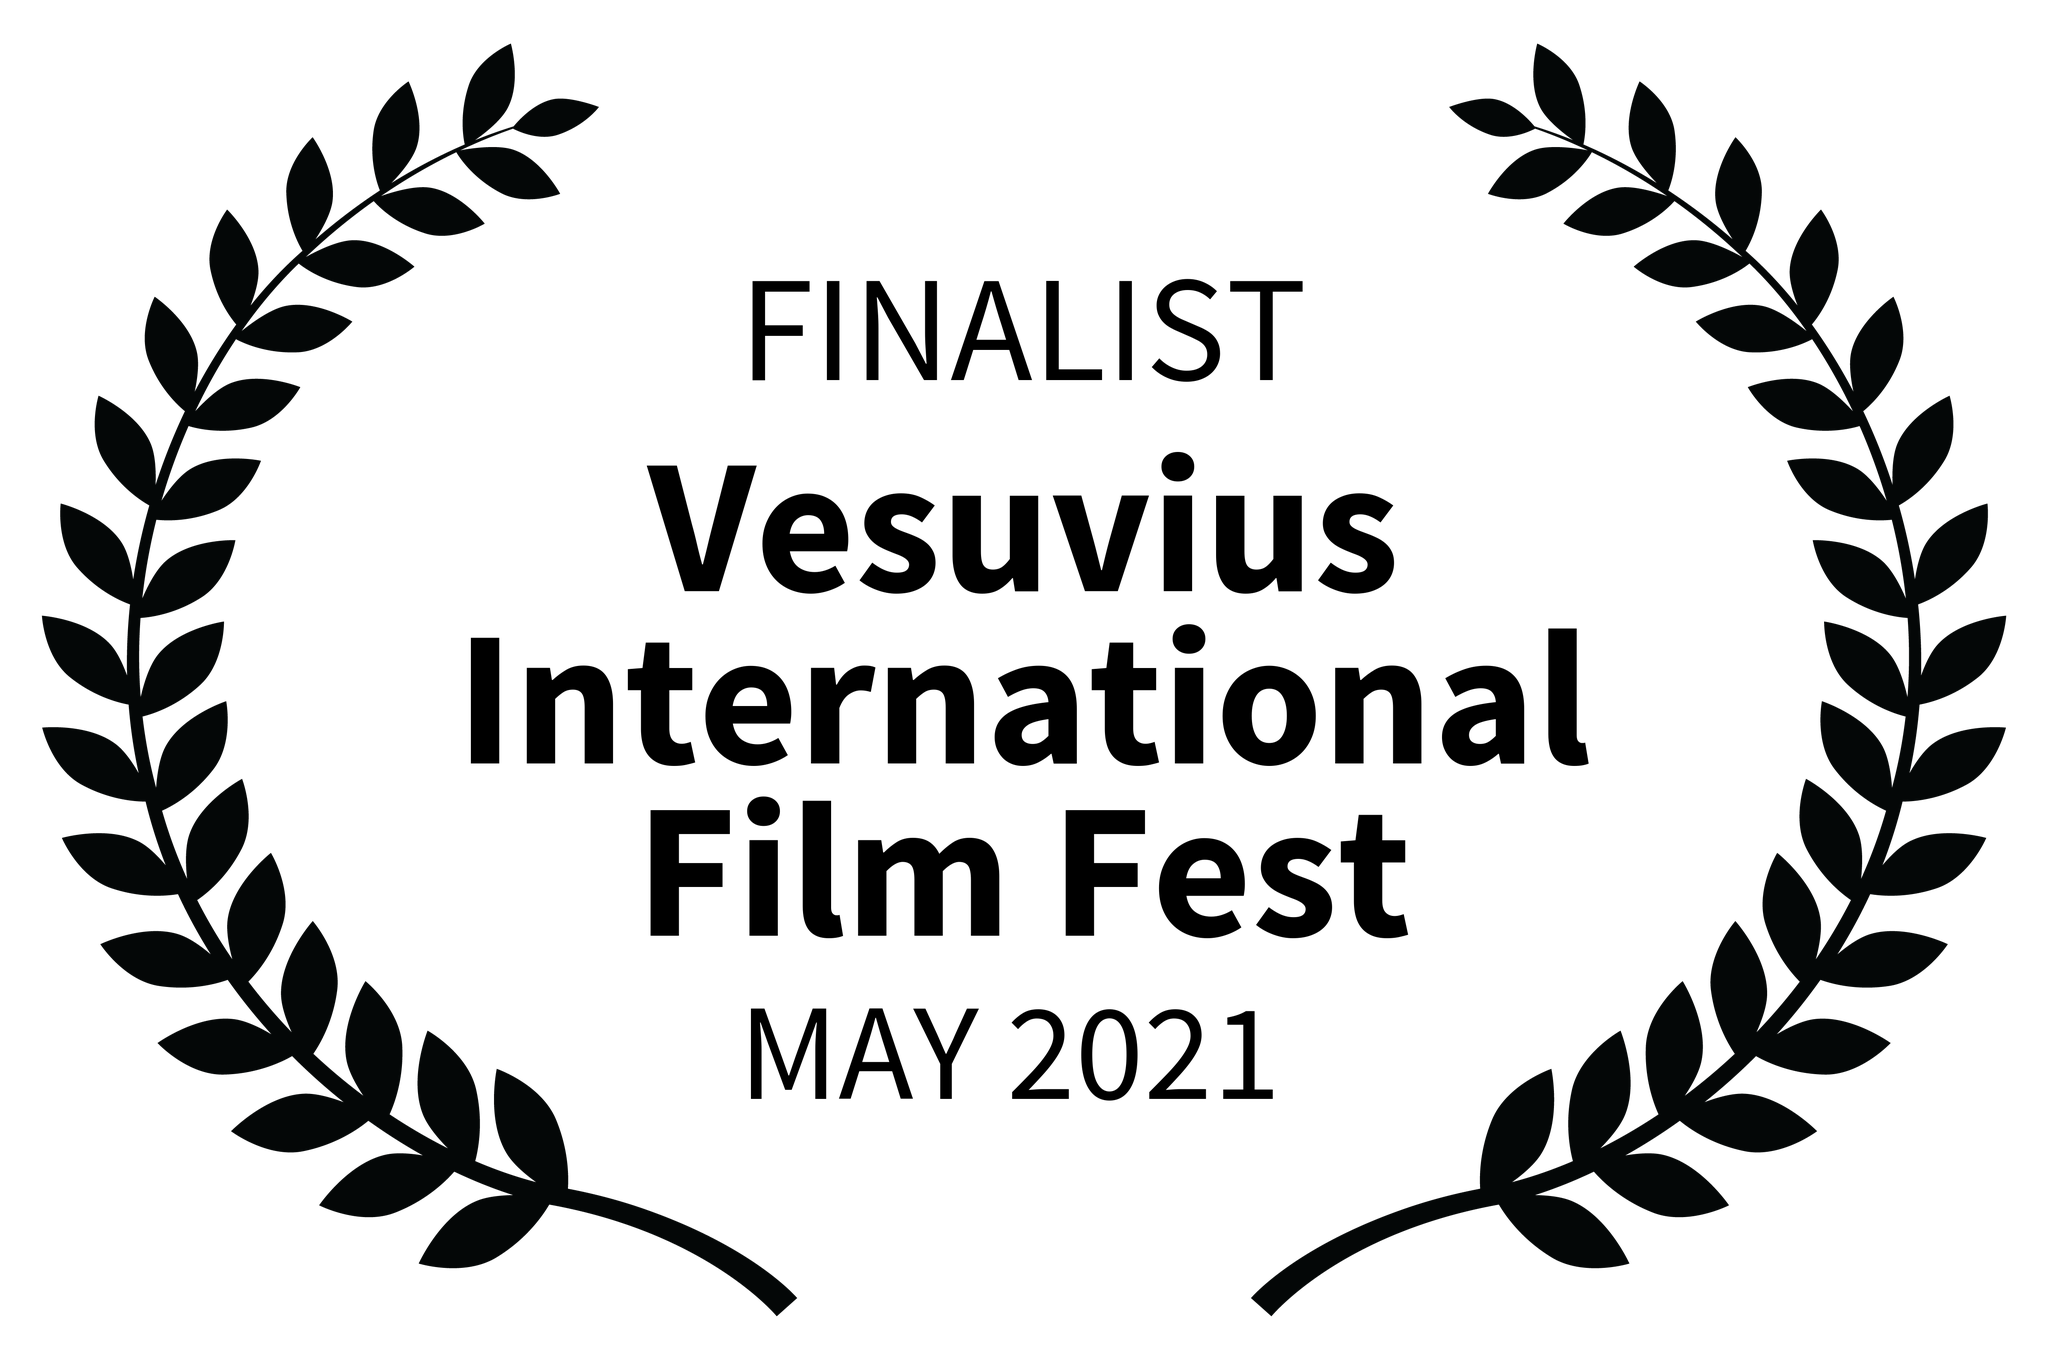 Vesuvius International Film Festival - Finalist (May 2021)